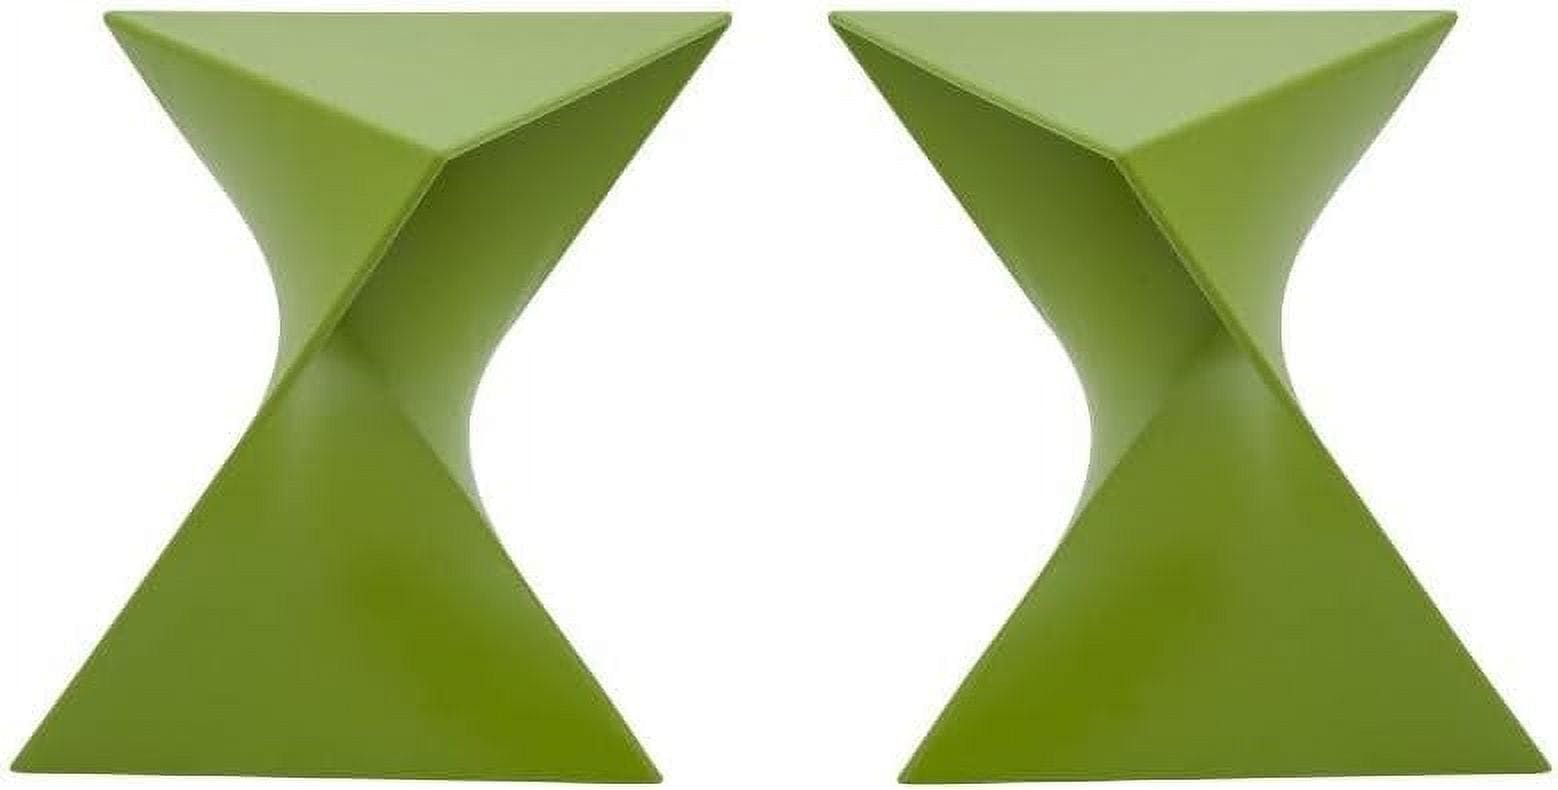 Randolph Vibrant Green Triangular Plastic Side Table